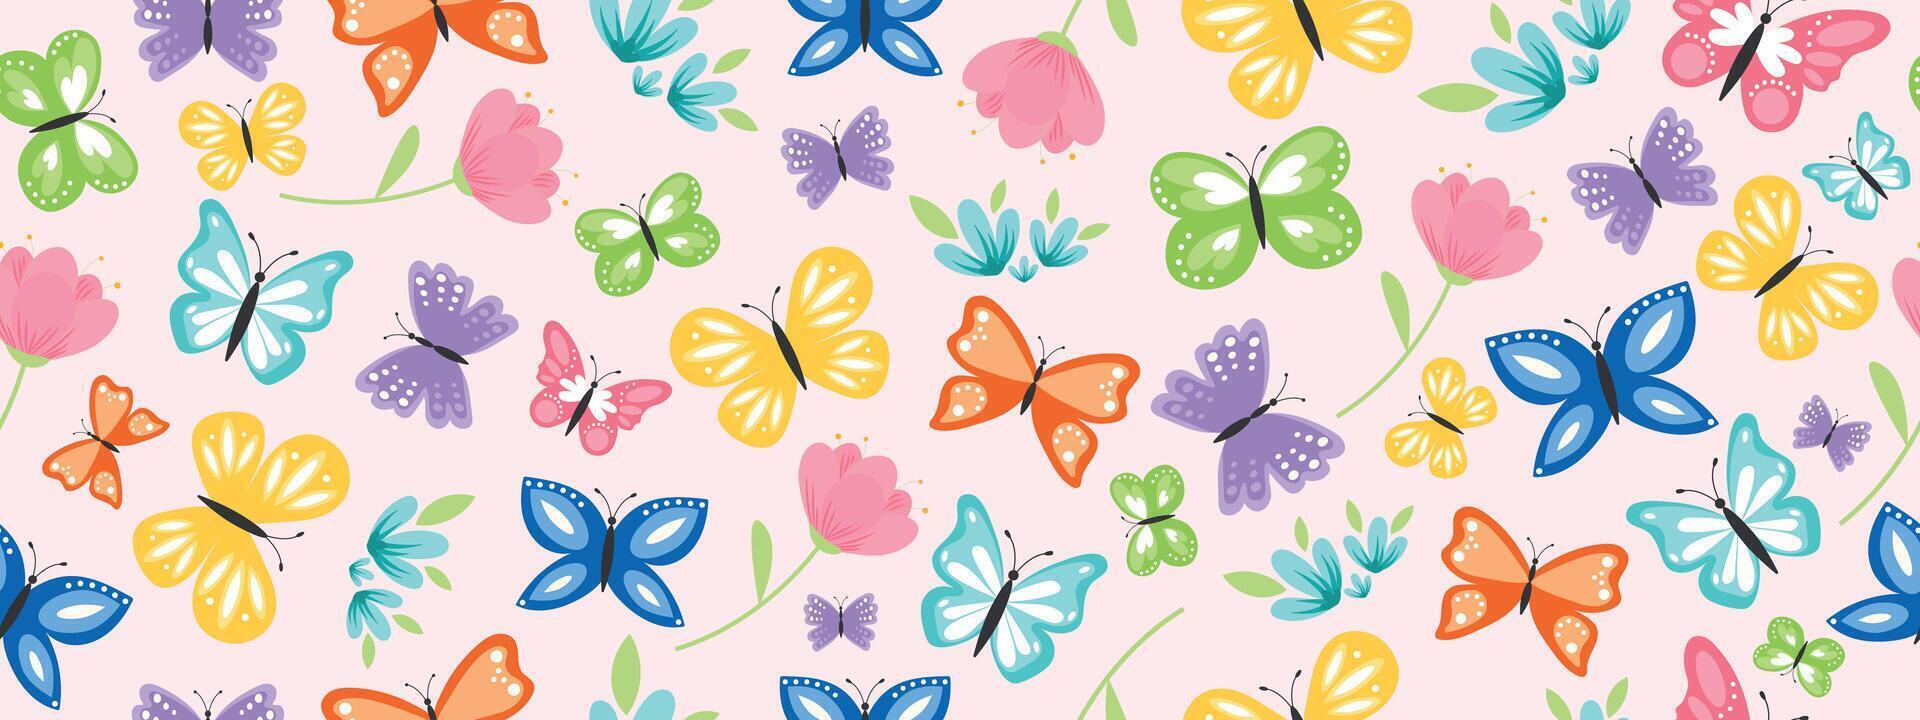 Cute cartoon butterflies with flowers. Seamless spring and summer pattern. vector